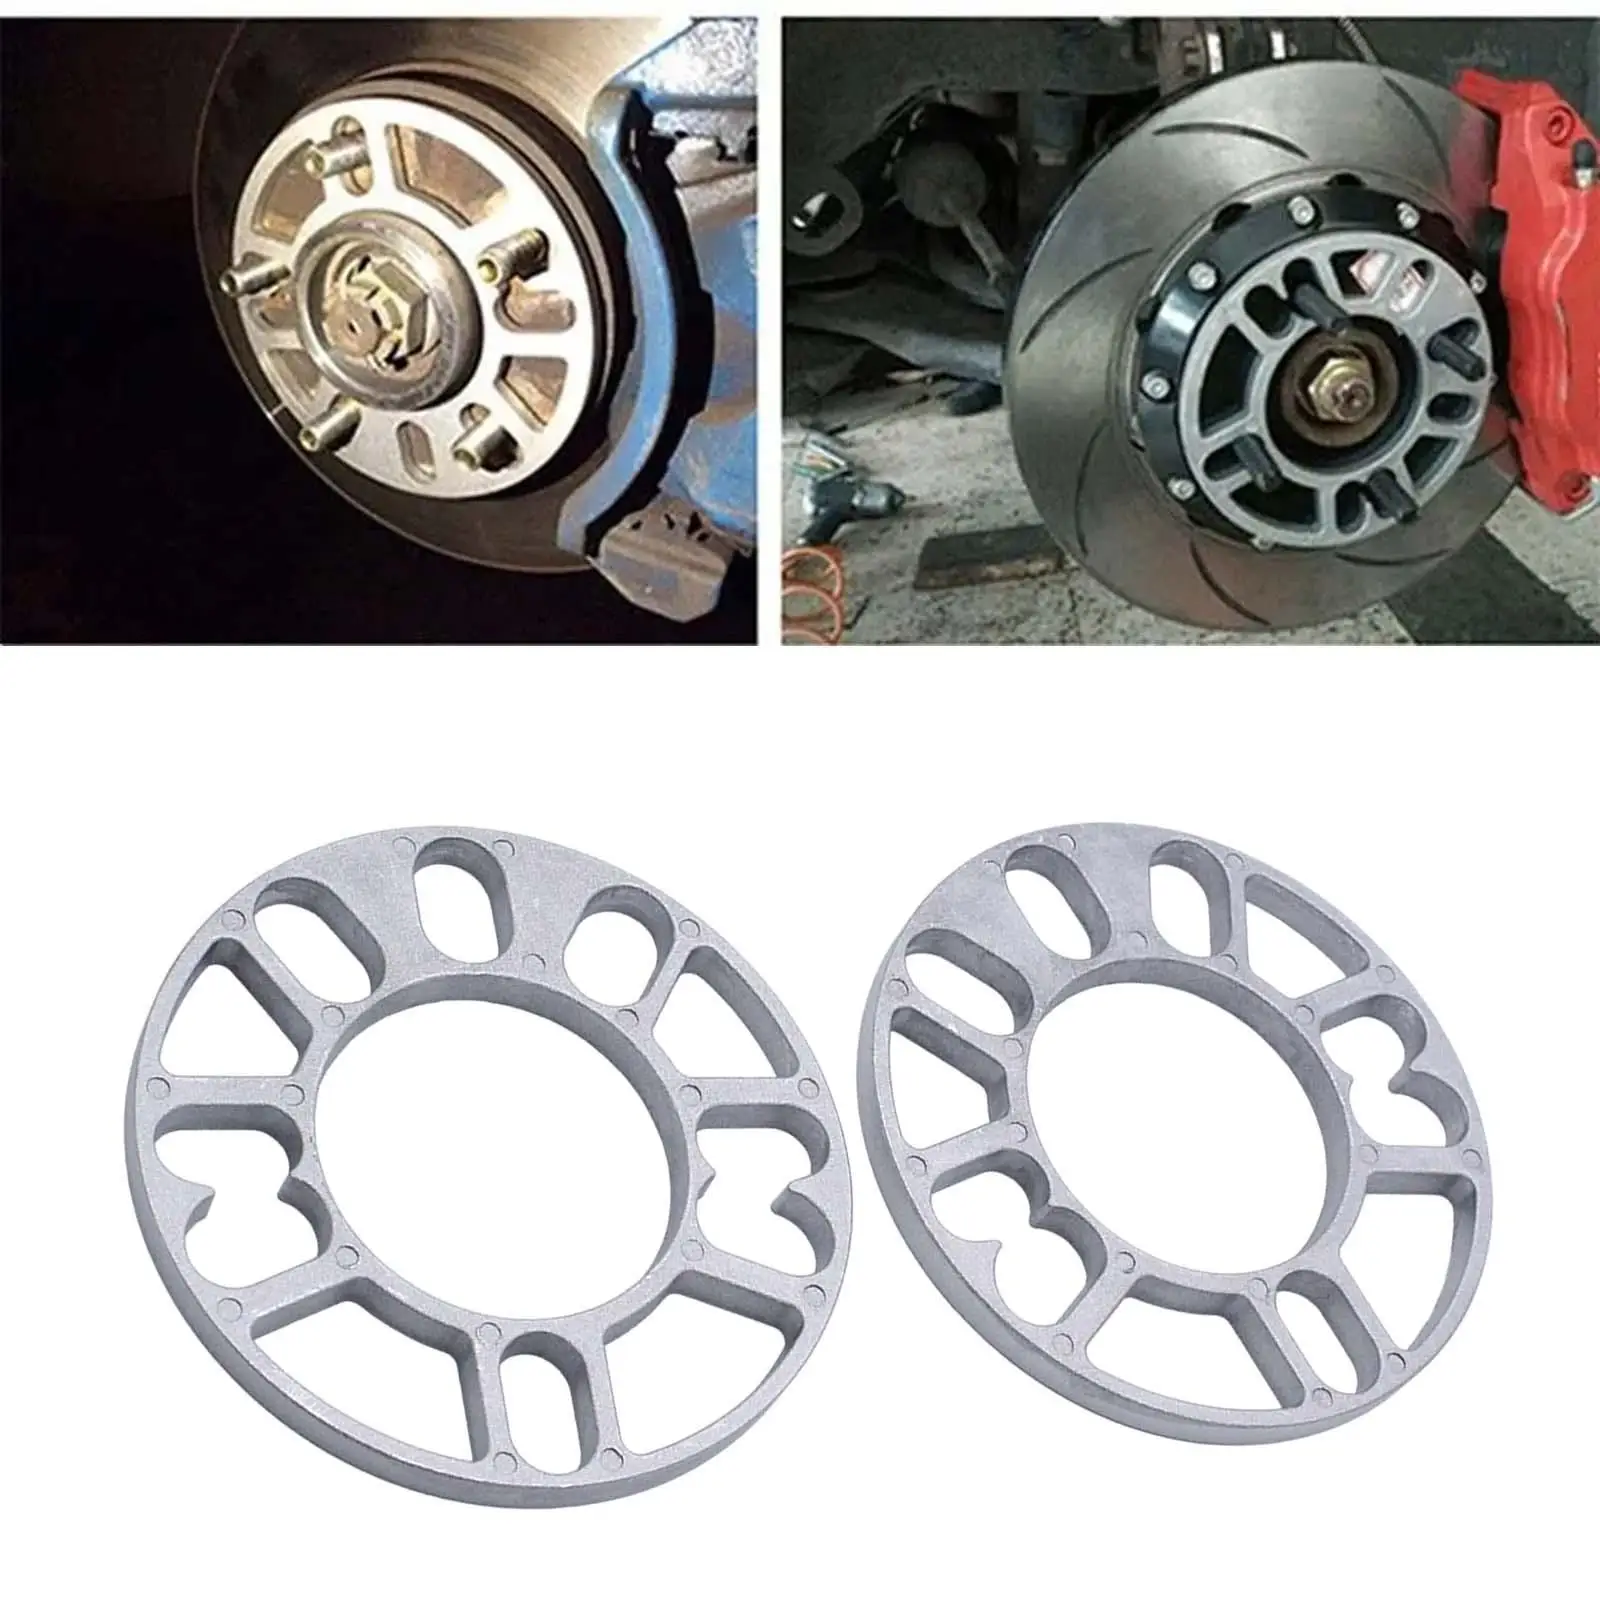 2Pcs Wheel Spacers Hub Spacer Shims Diameter 5.9inch Universal Aluminum for 10mm Stud Wheels Easily Install Wear Resistant